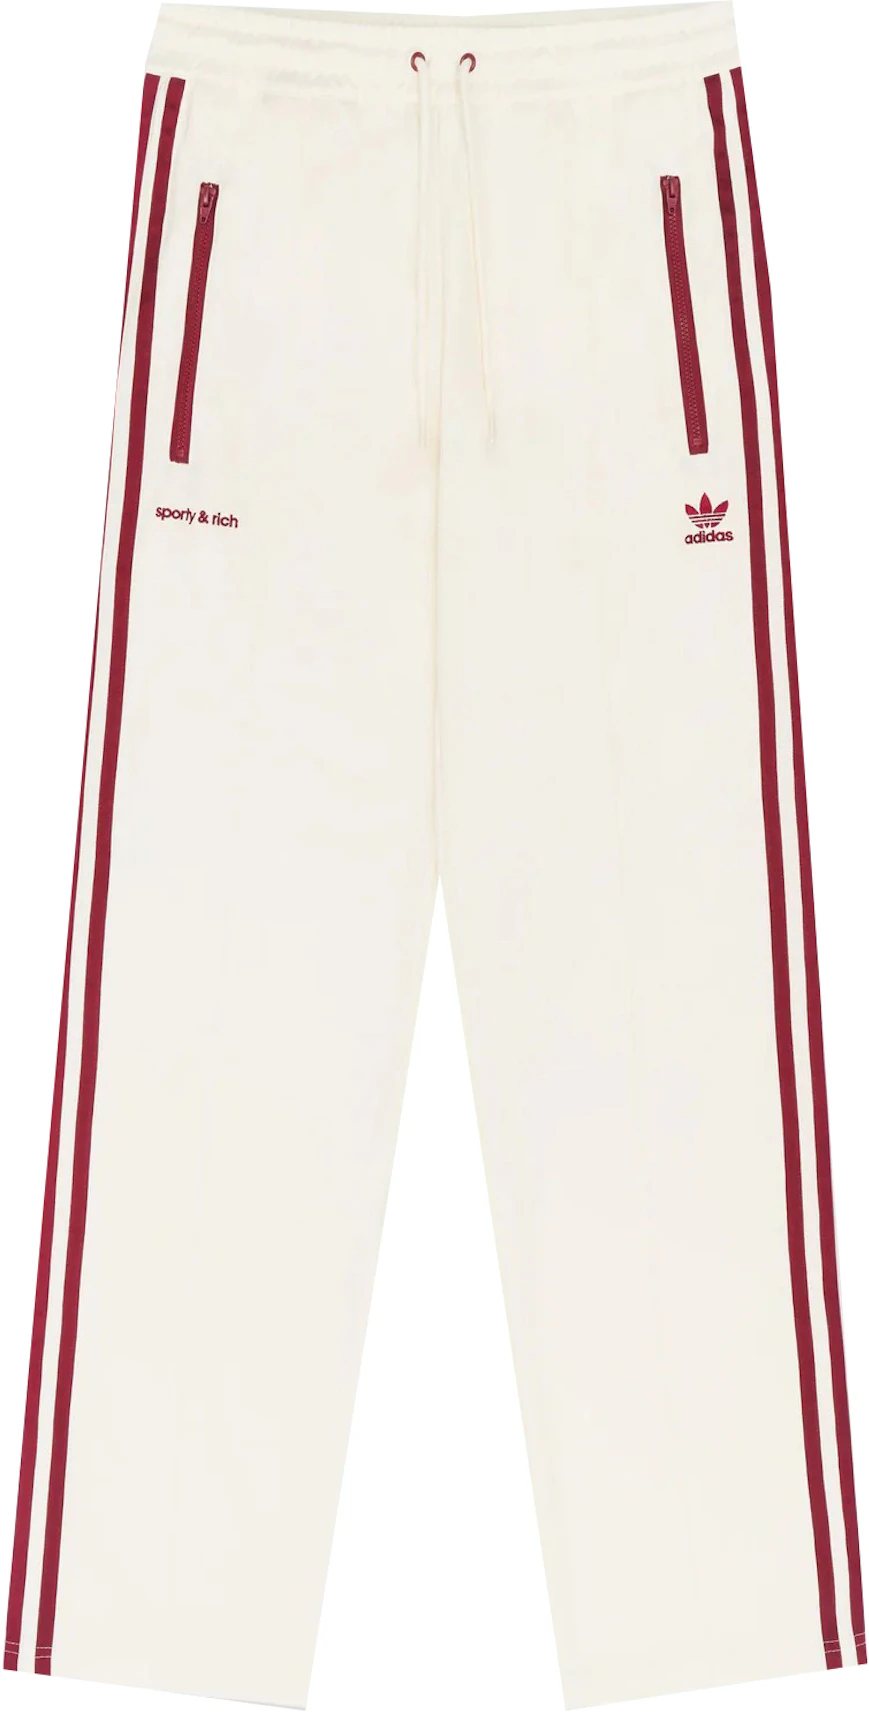 Sporty & Rich x adidas Track Pants Cream/Merlot - FW22 - US